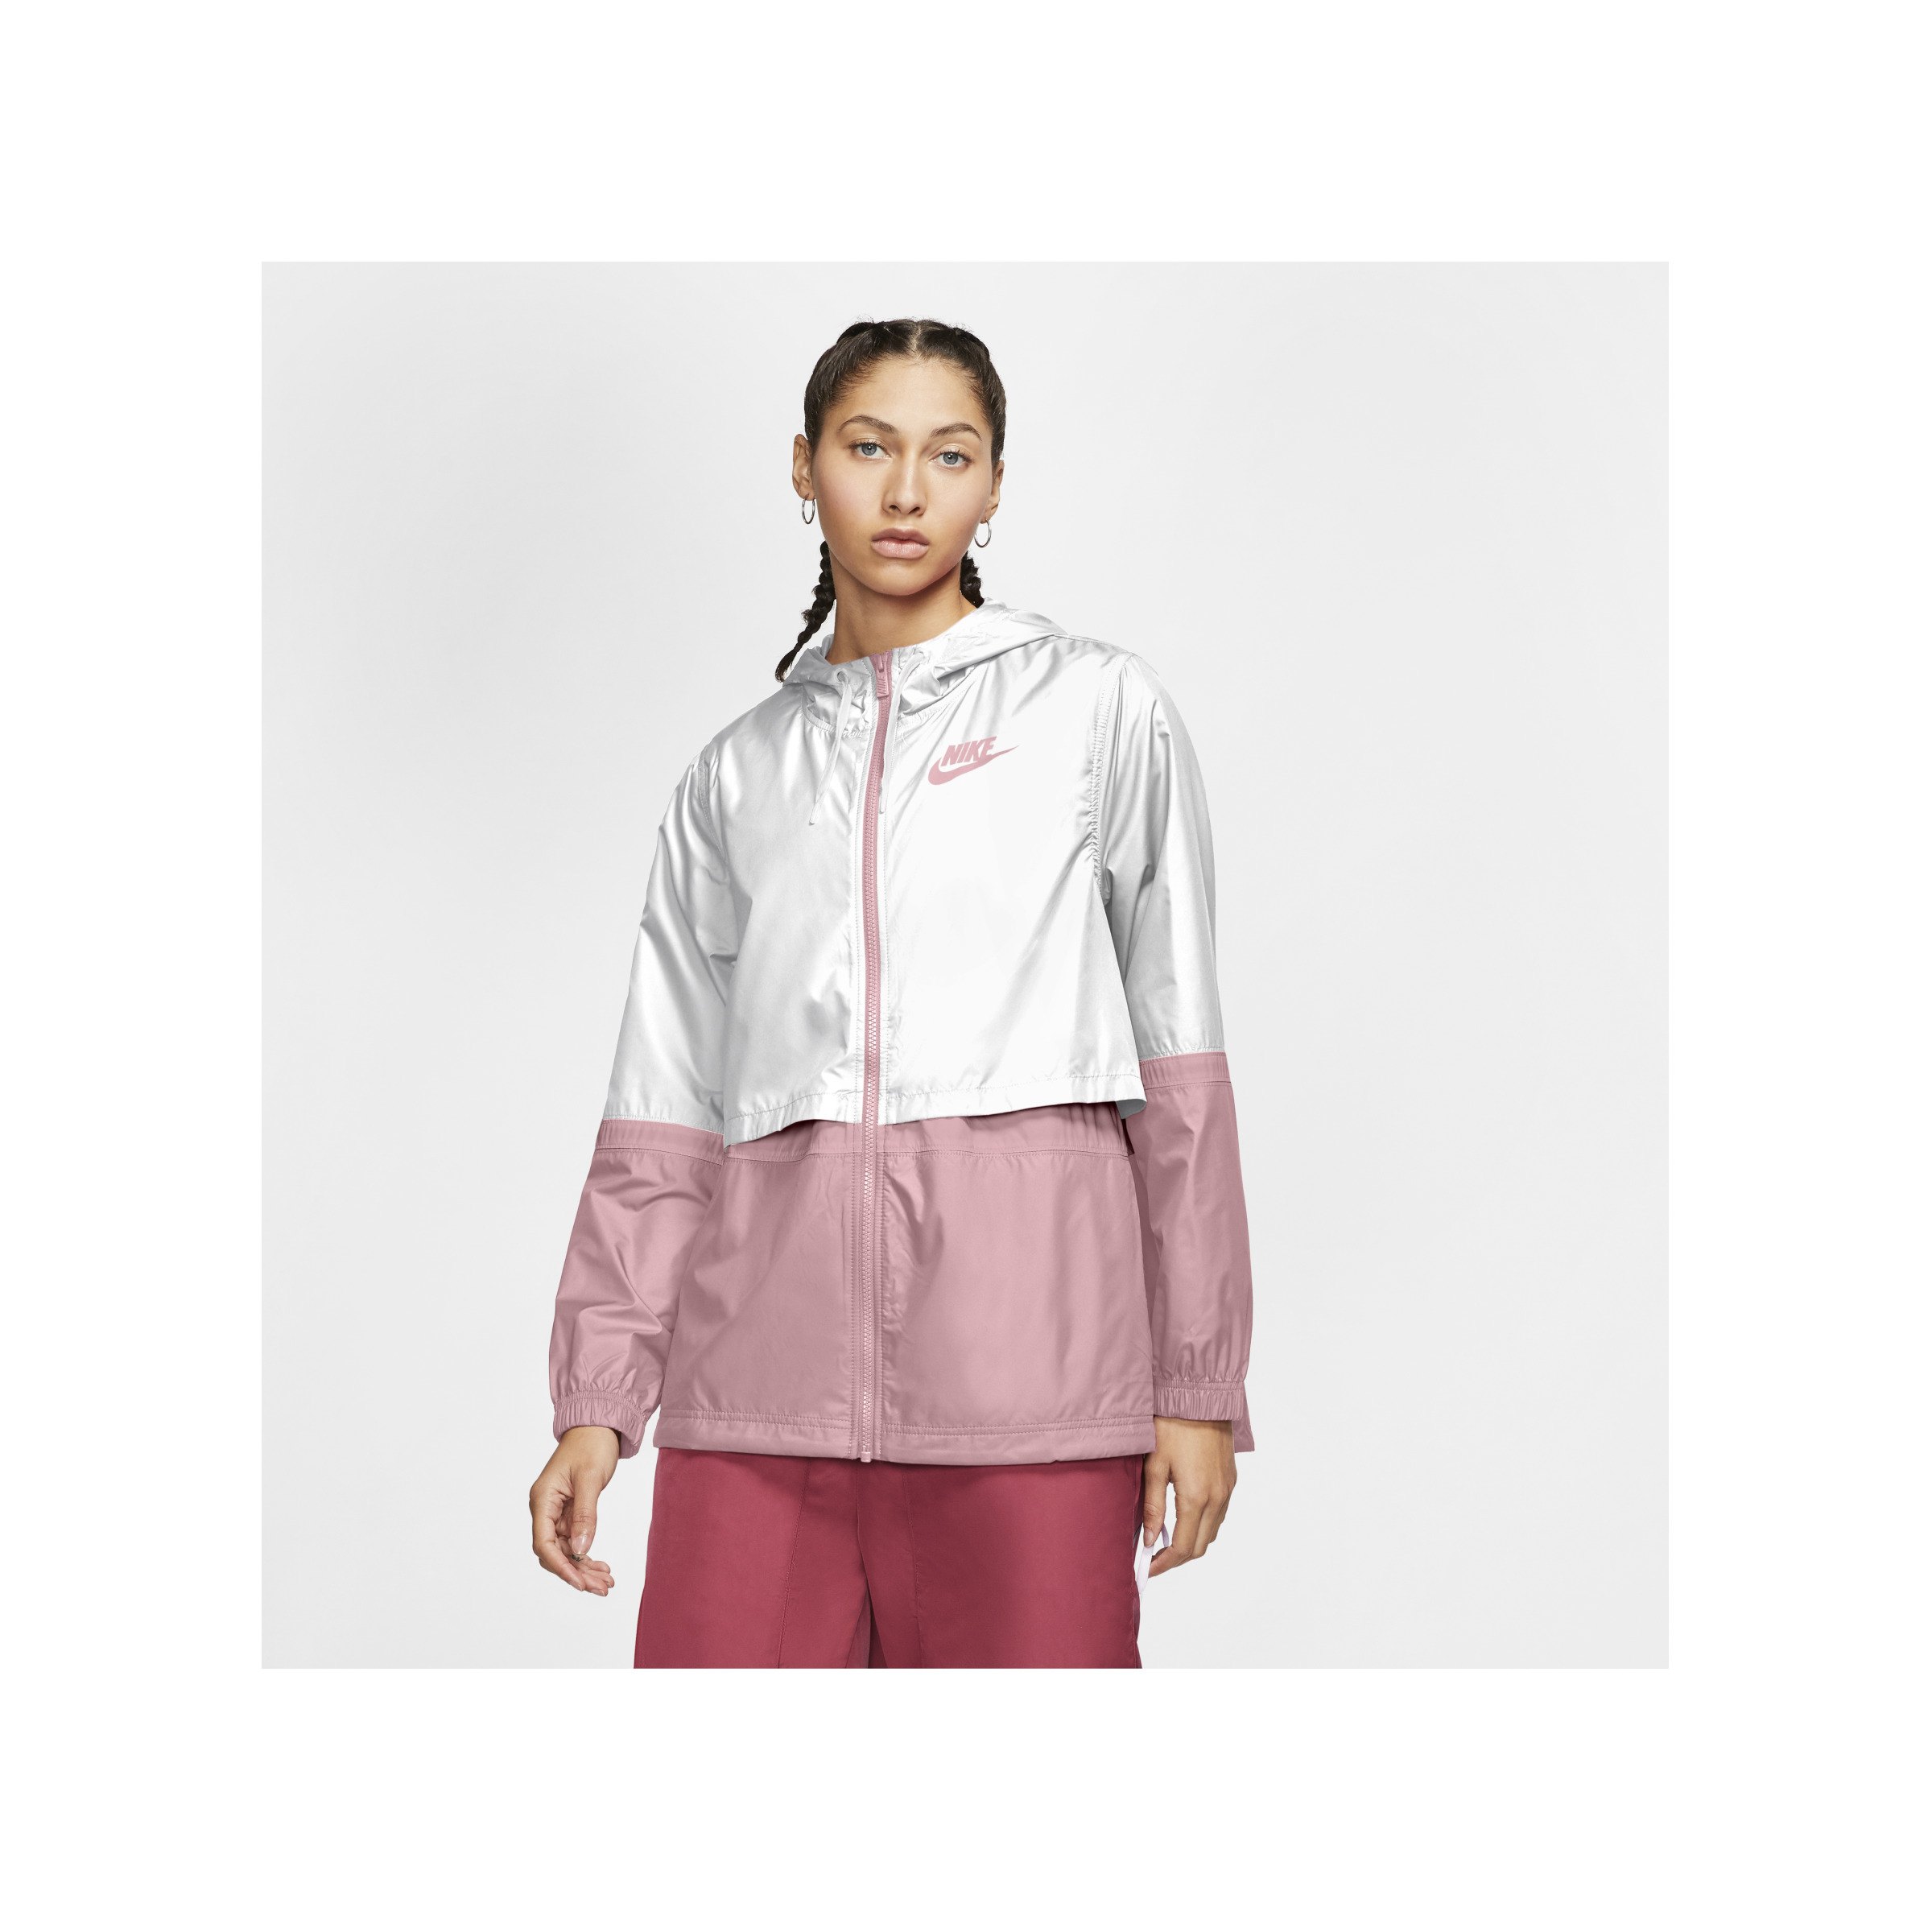 Nike Woven Jacke Damen Weiss Pink F109 weiss